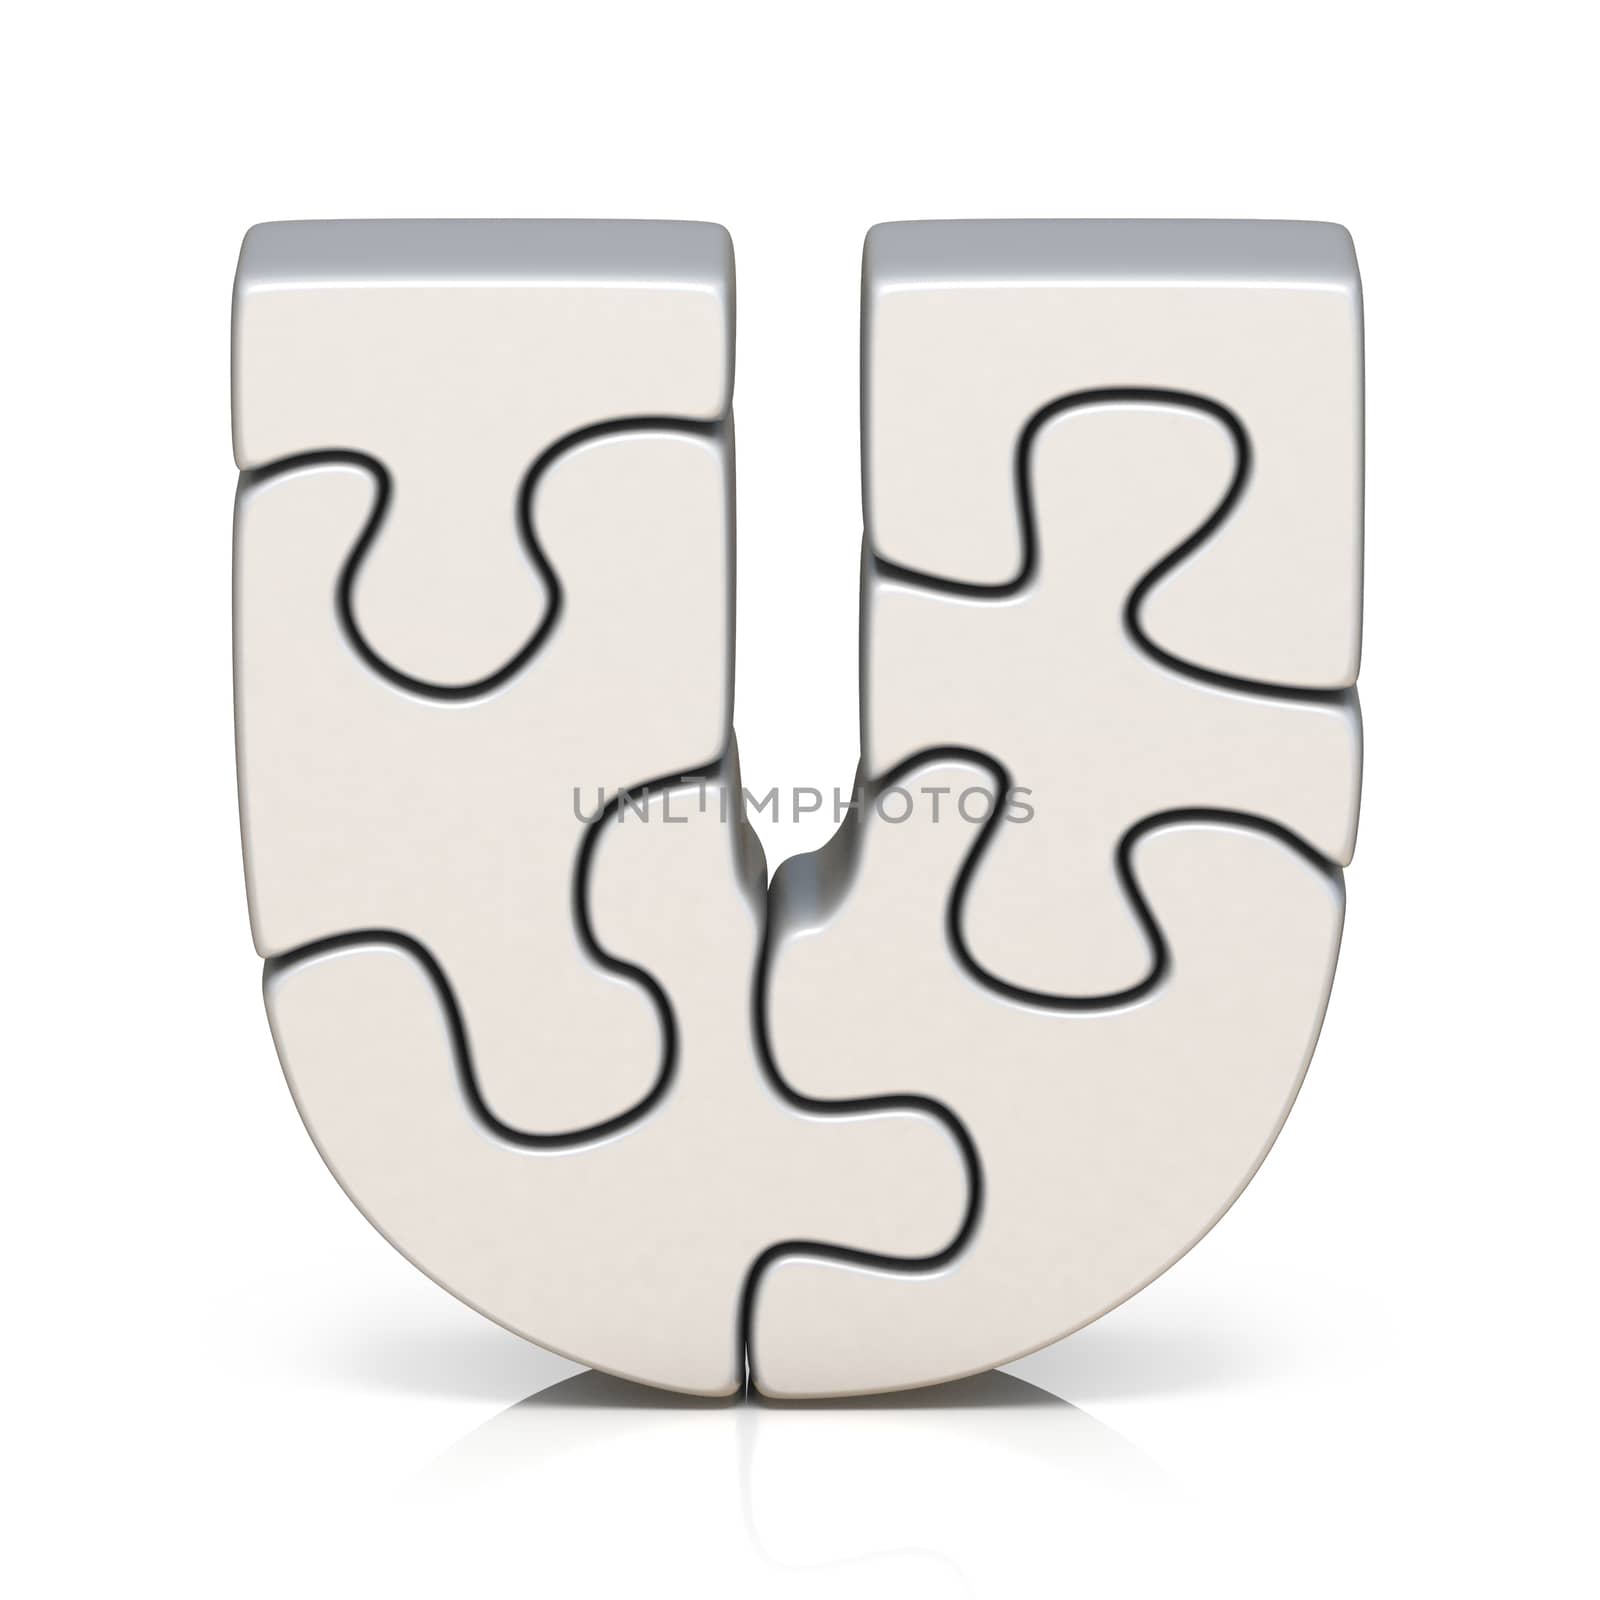 White puzzle jigsaw letter U 3D render illustration isolated on white background